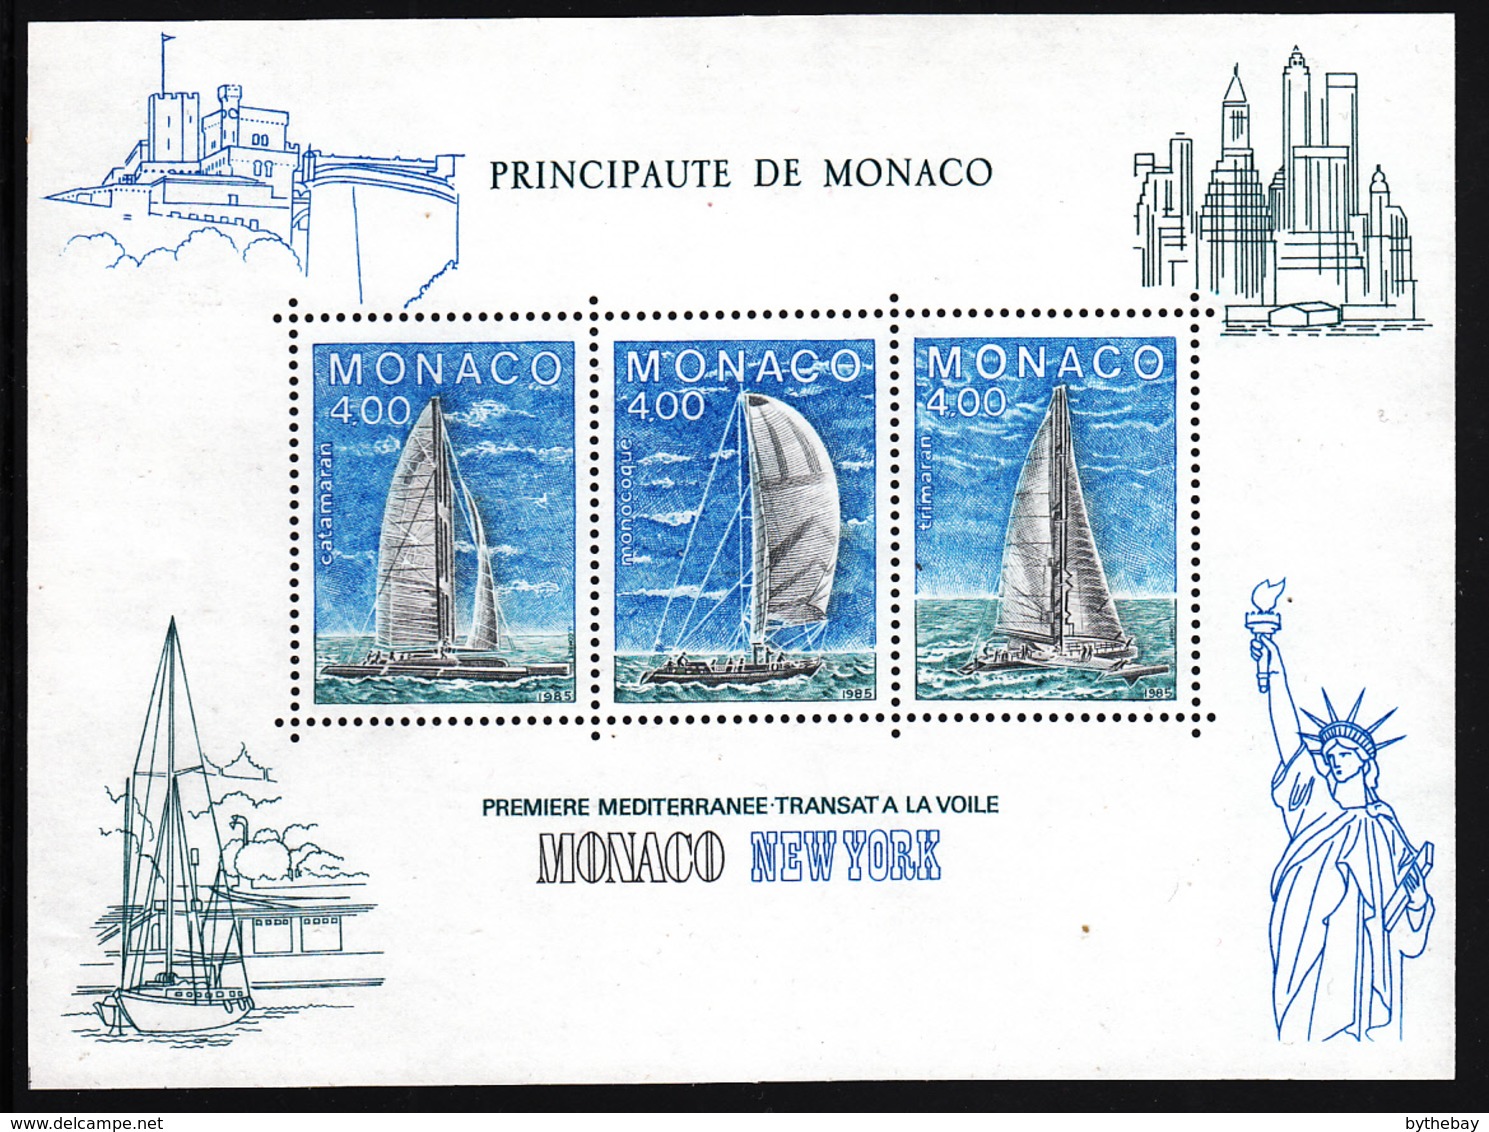 Monaco 1985 MNH Sc #1486 Monaco New York Transatlantic Yachting Race - Ongebruikt